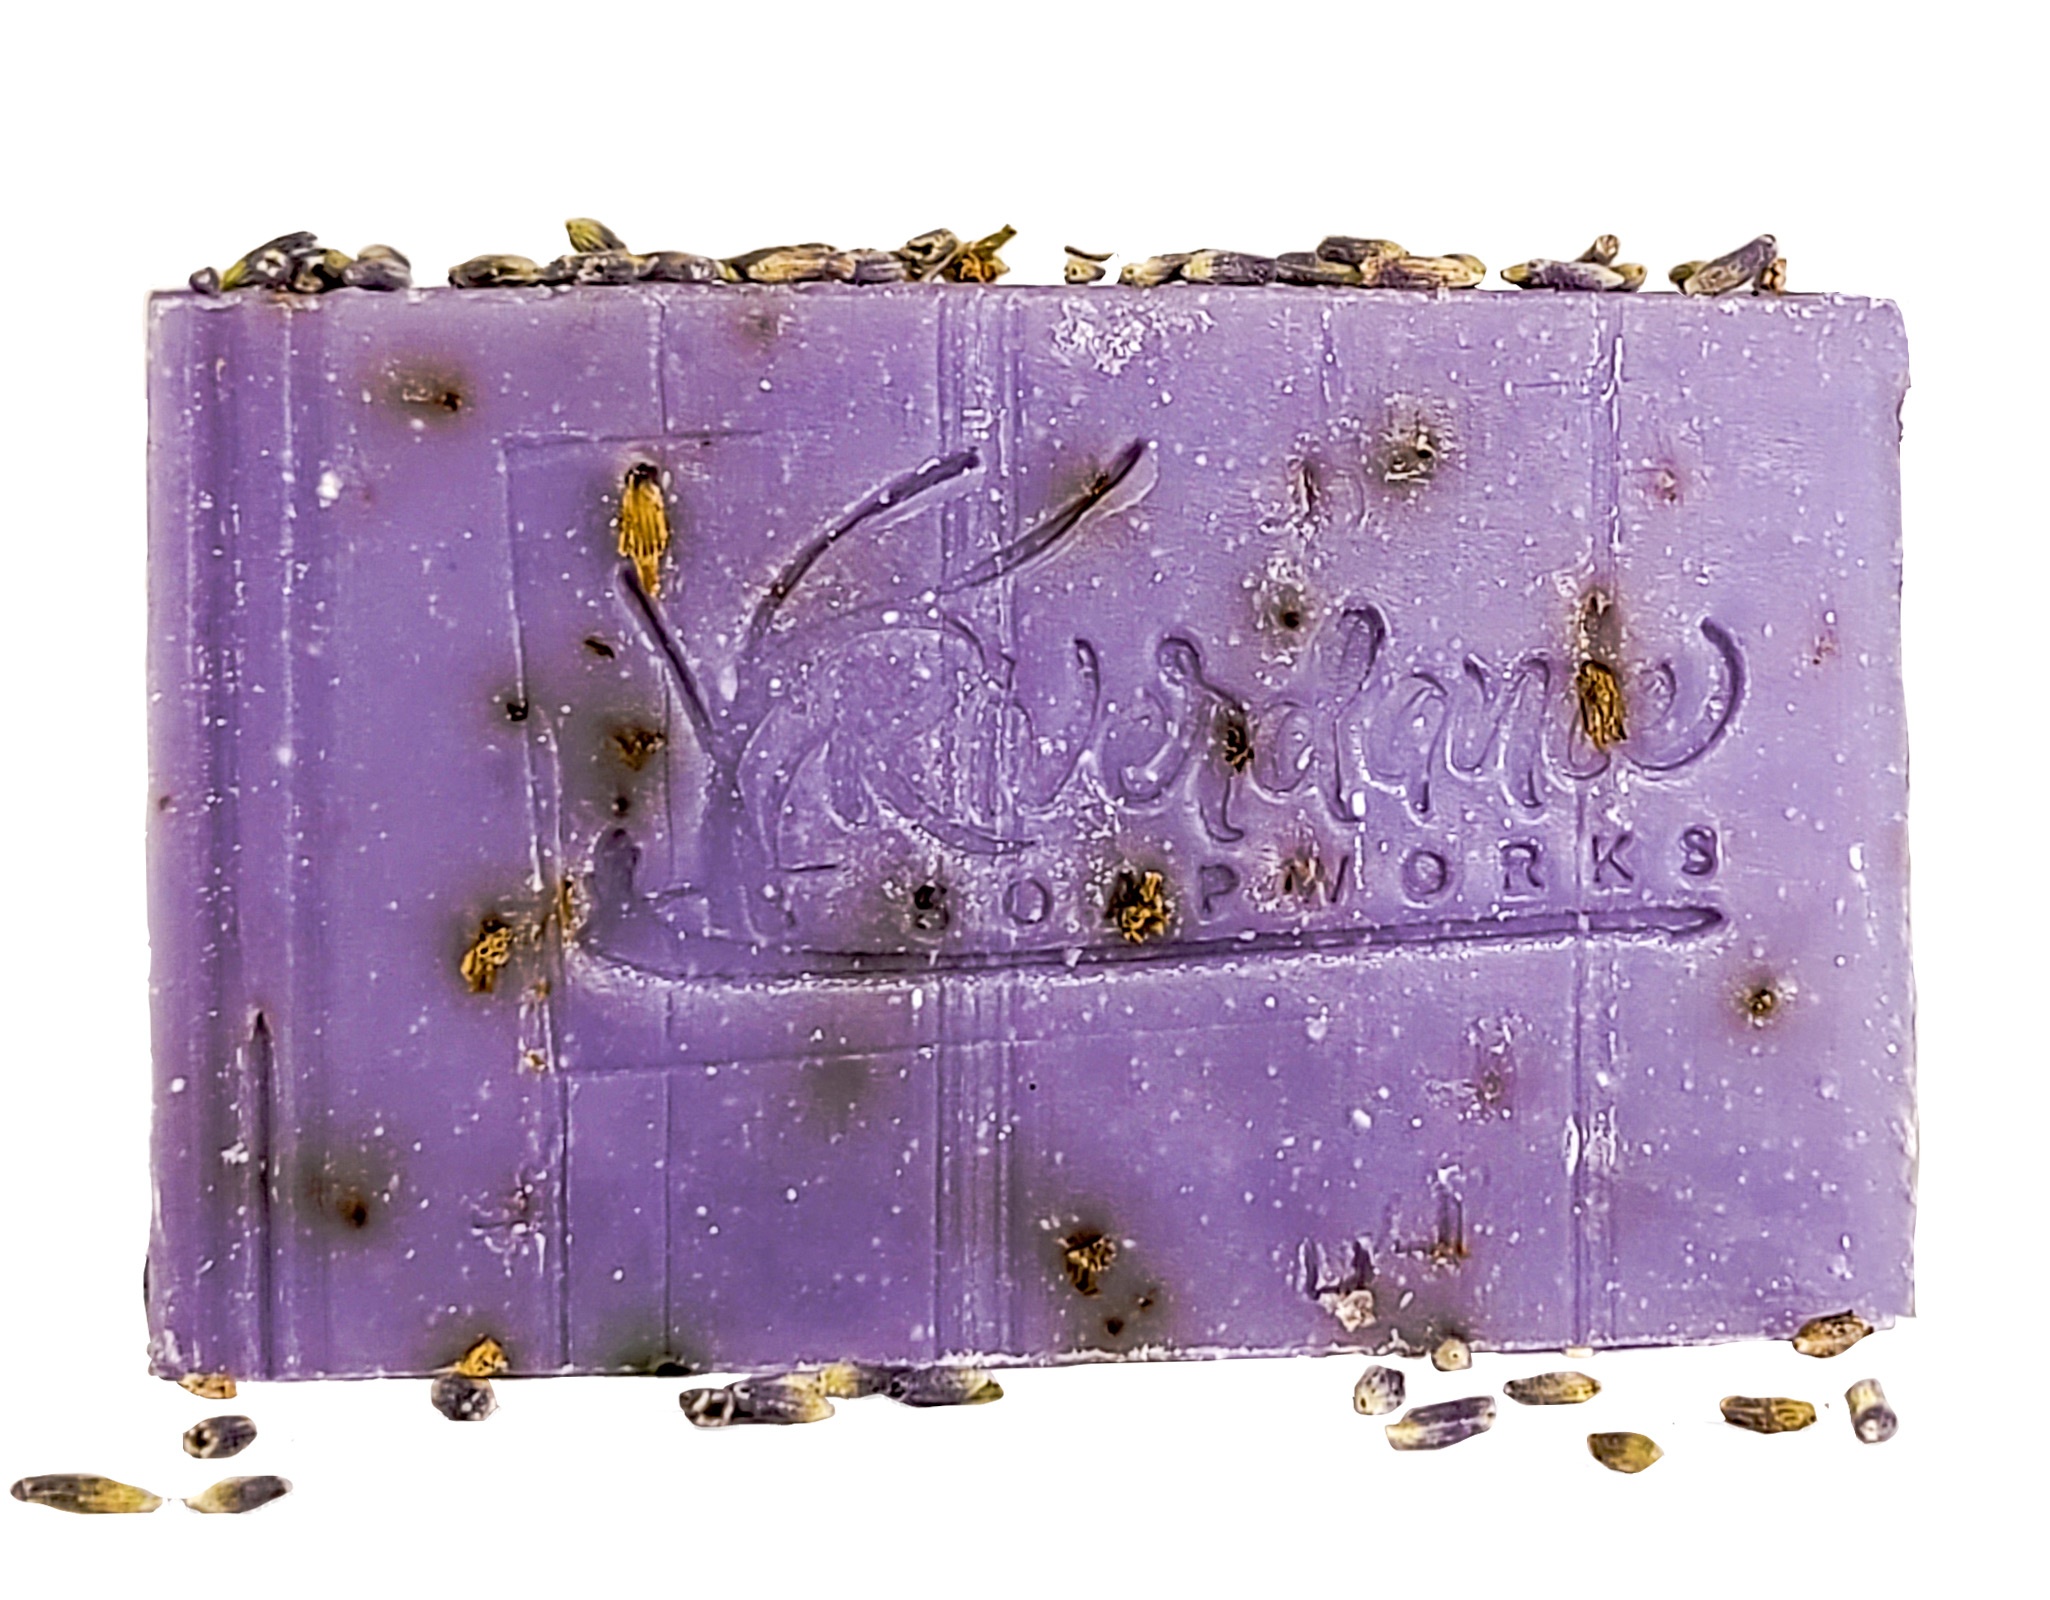 Lavender soap product image